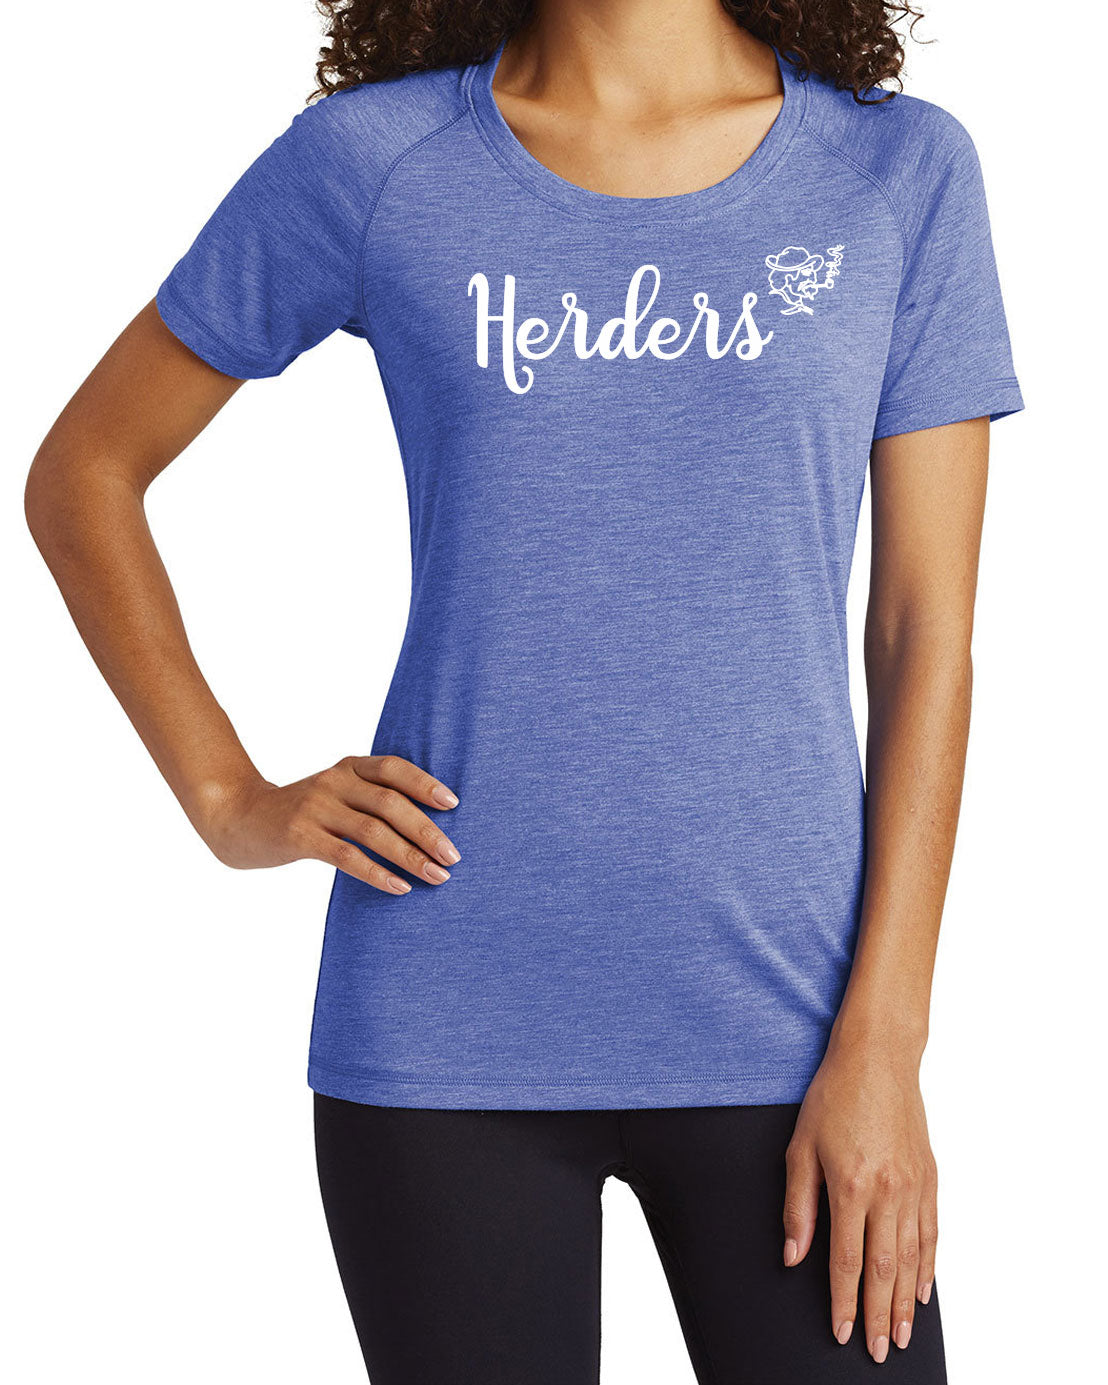 Women's True Royal T-Shirt Heather Modern Script Herders Design 1